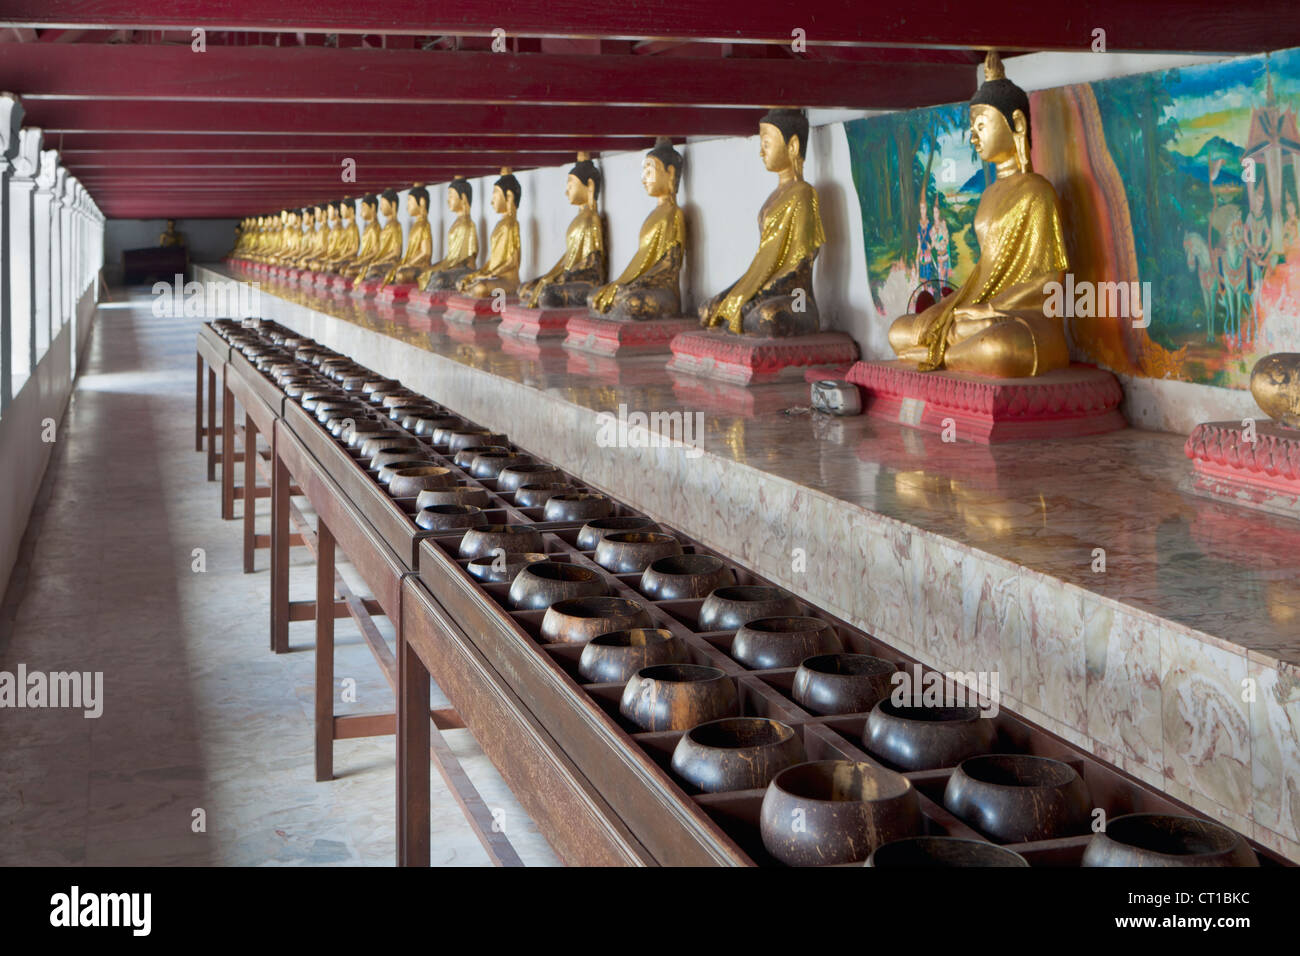 Wooden bowls for merit making at Wat Phra Mahathat Woramahawihaan temple, Nakhon Si Thammarat, Thailand Stock Photo